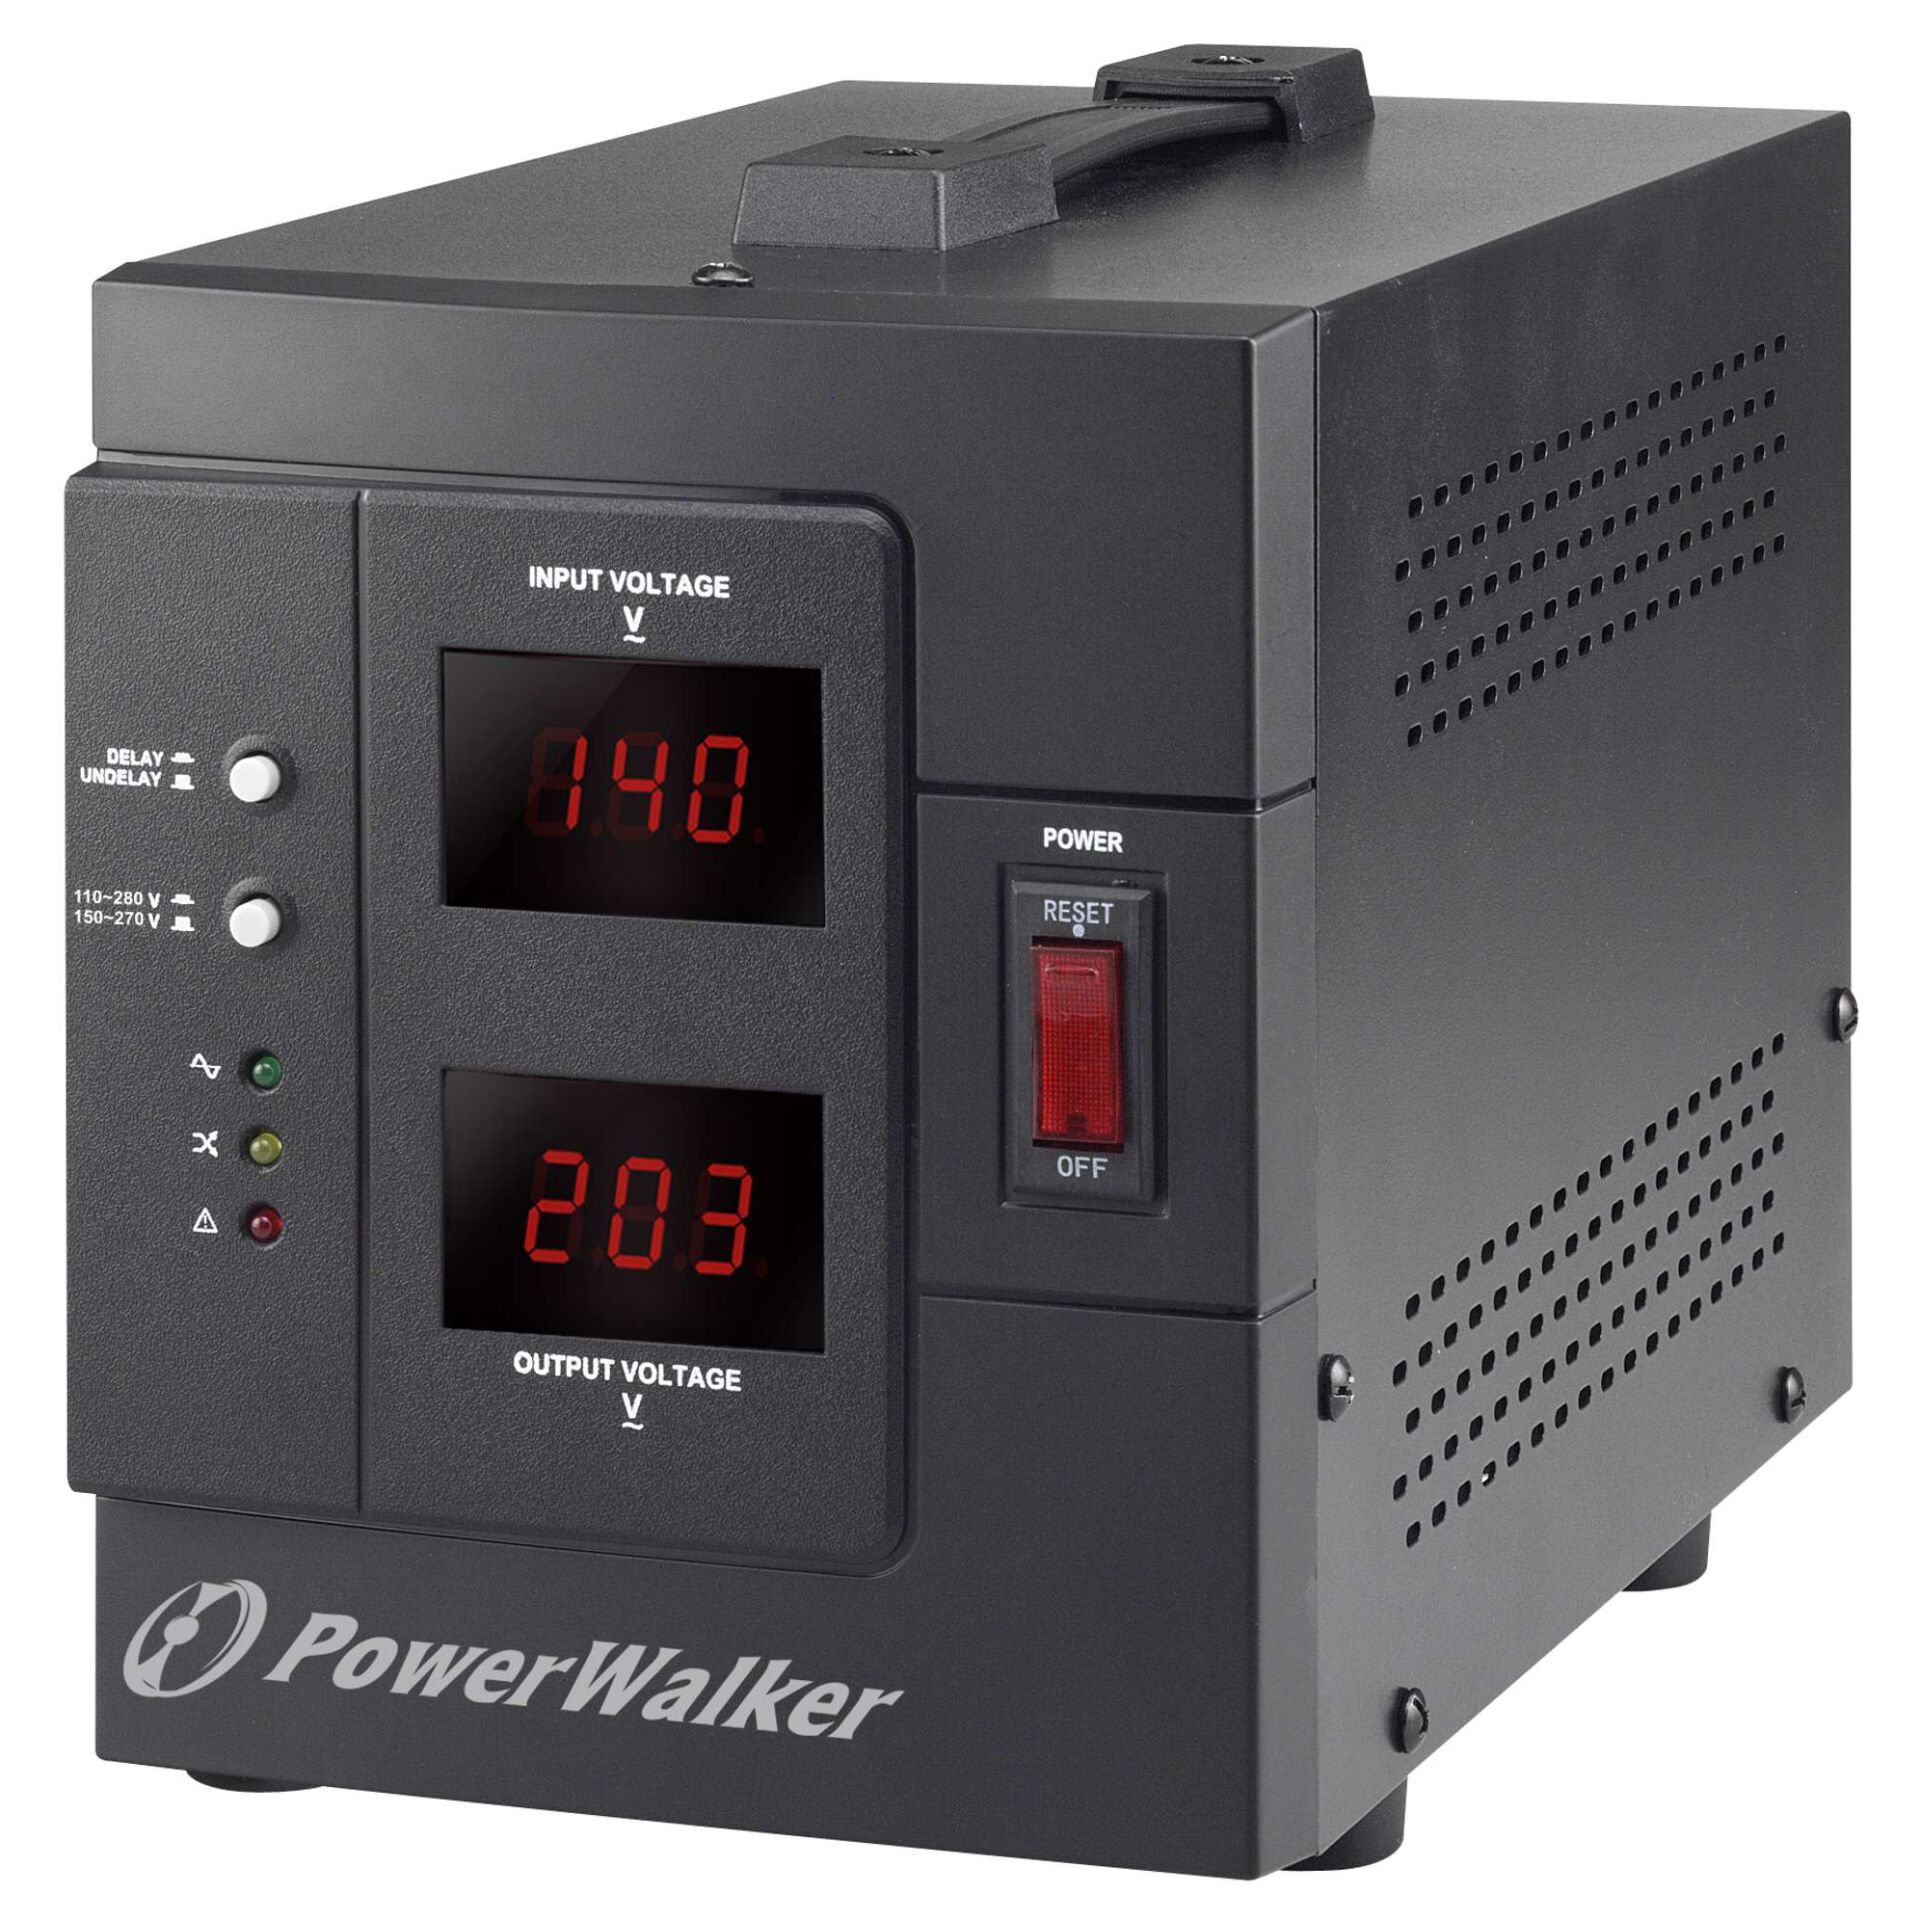 PowerWalker AVR 2000 SIV FR automatic voltage regulator